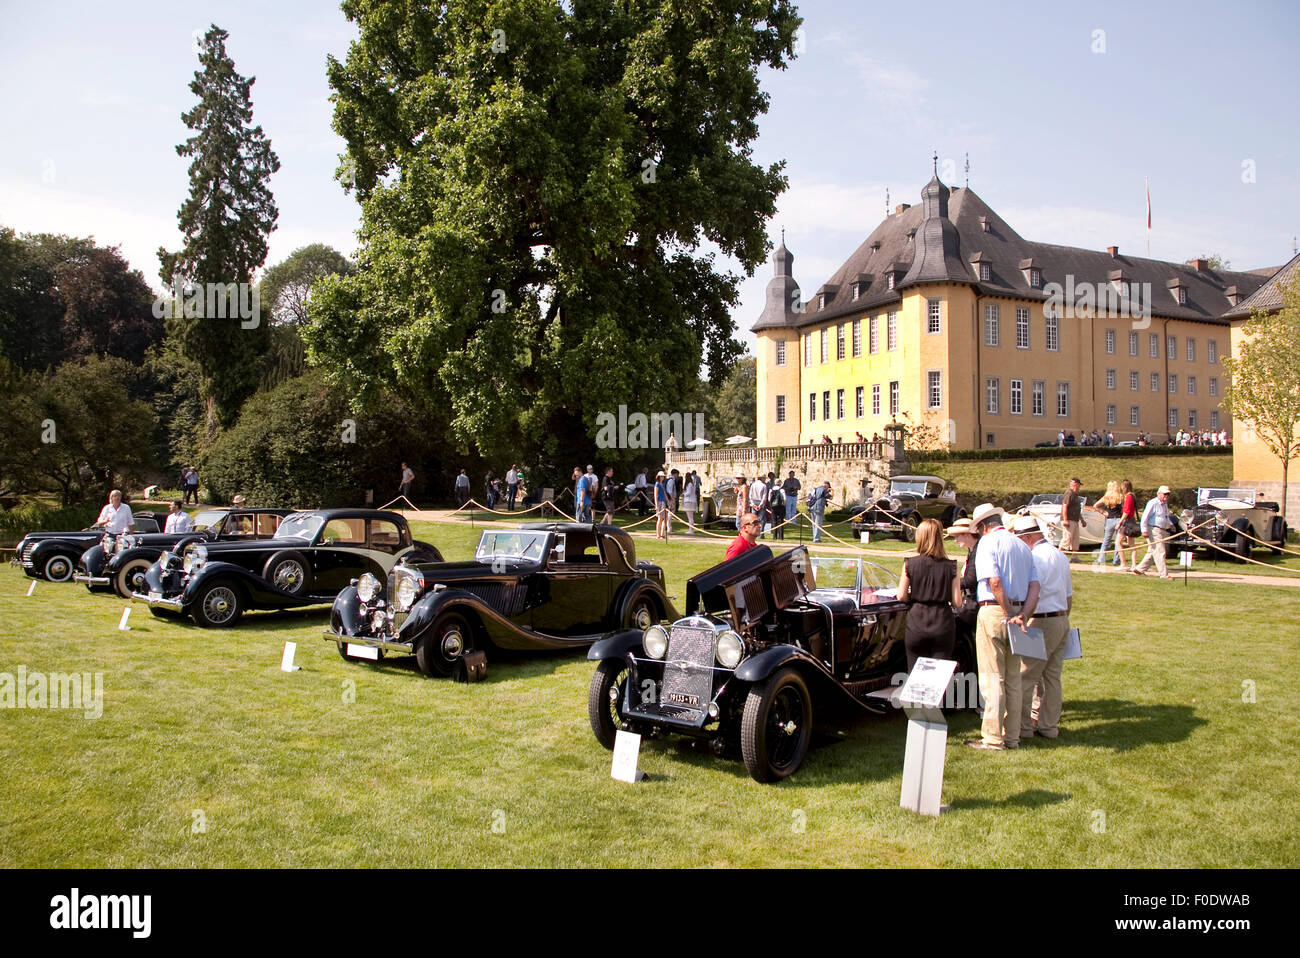 Días clásicos auto show en Schloss Dyck cerca de Dusseldorf ALEMANIA 2014 Foto de stock